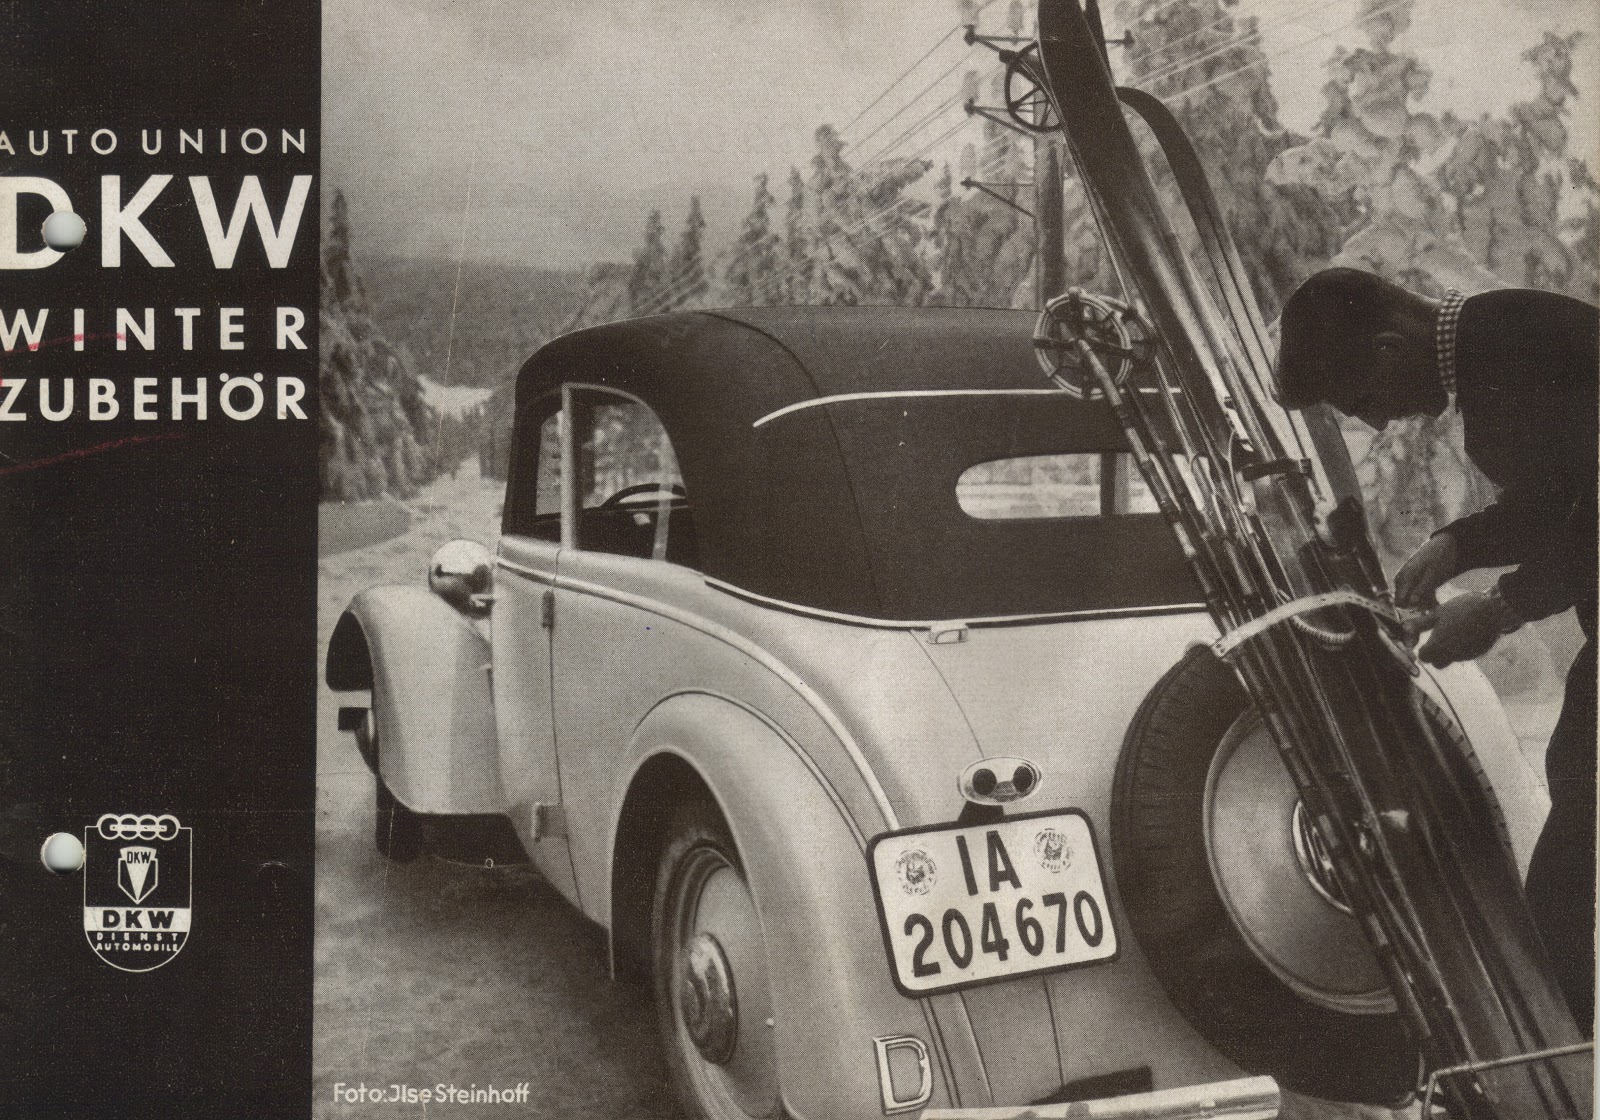 DKW Auto-Union Project: 1937 DKW Winter Accessories